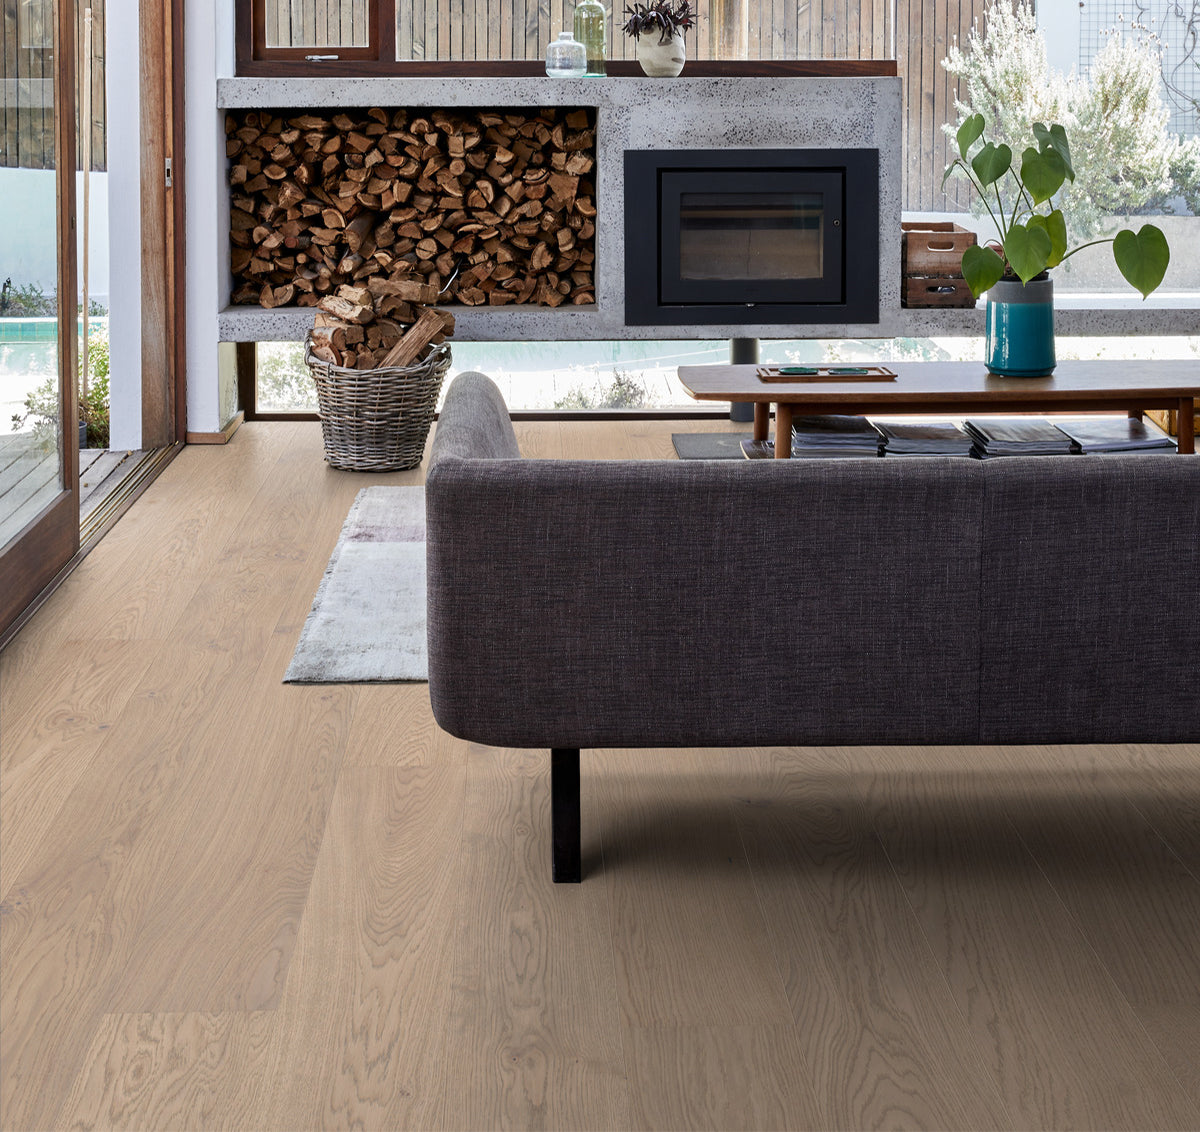 wide plank full length stuga hardwood flooring, ingrid for whole home remodels